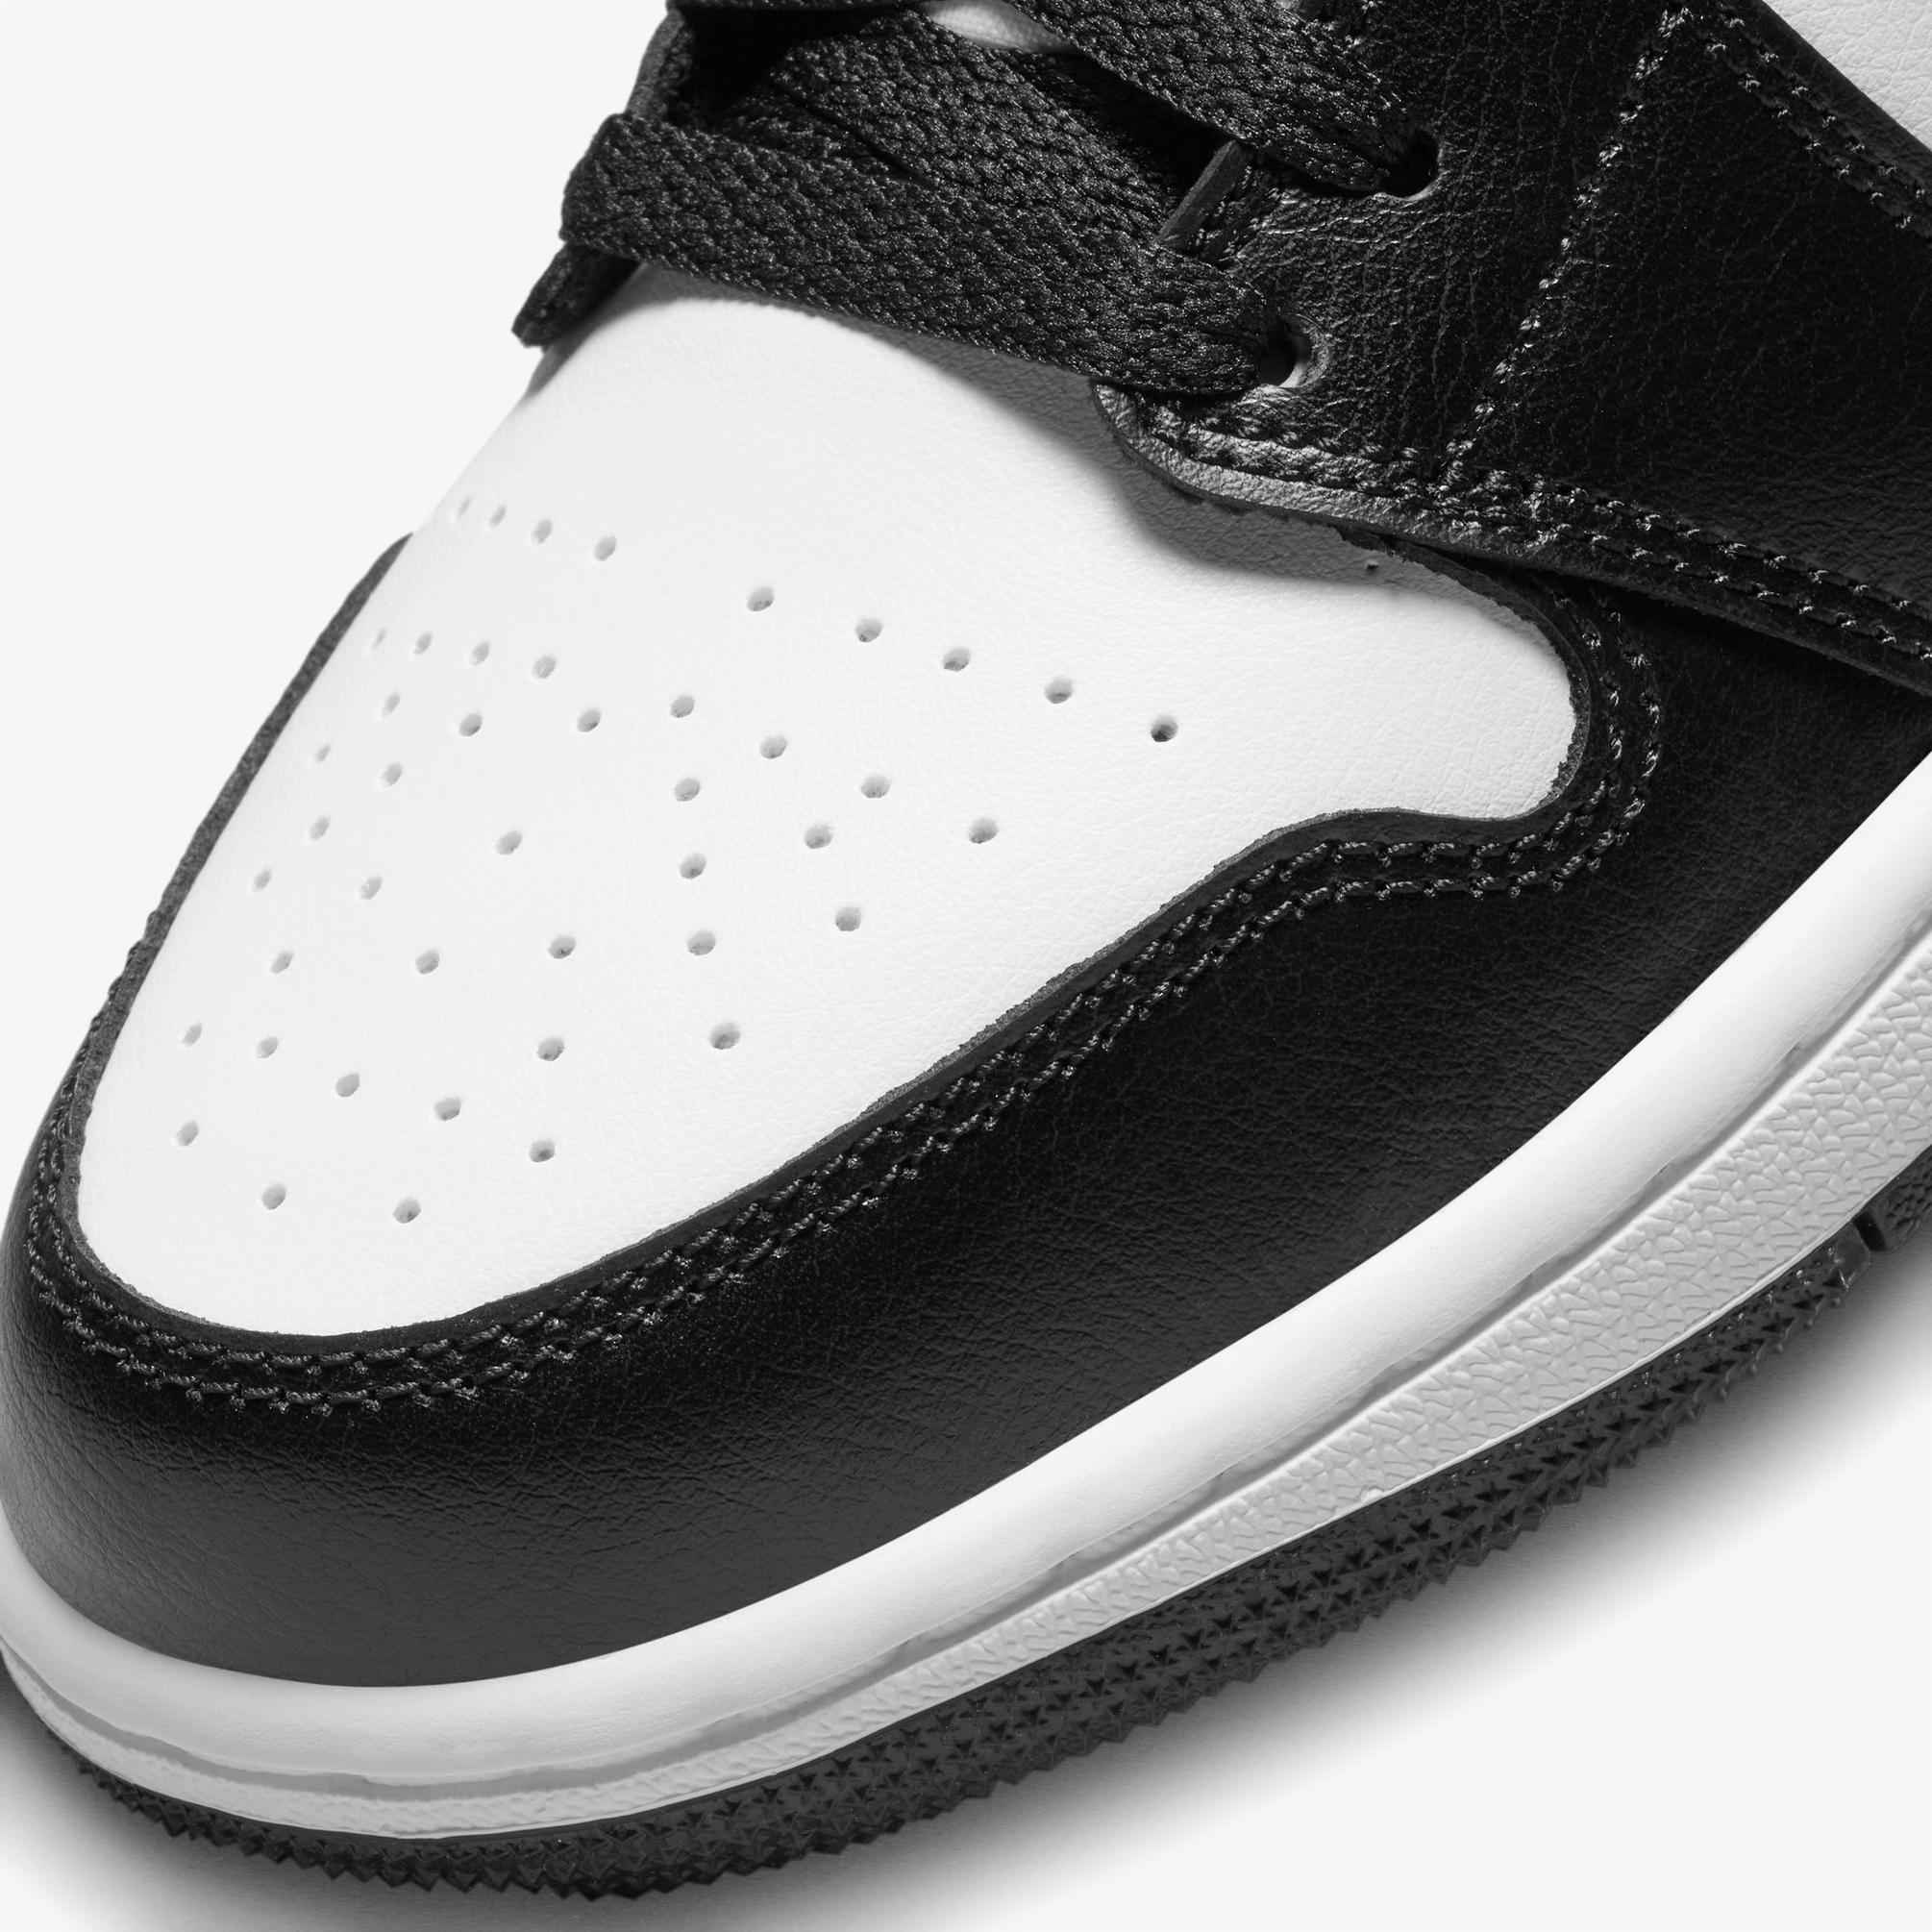  Jordan Air 1 Low Panda Kadın Siyah/Beyaz Sneaker